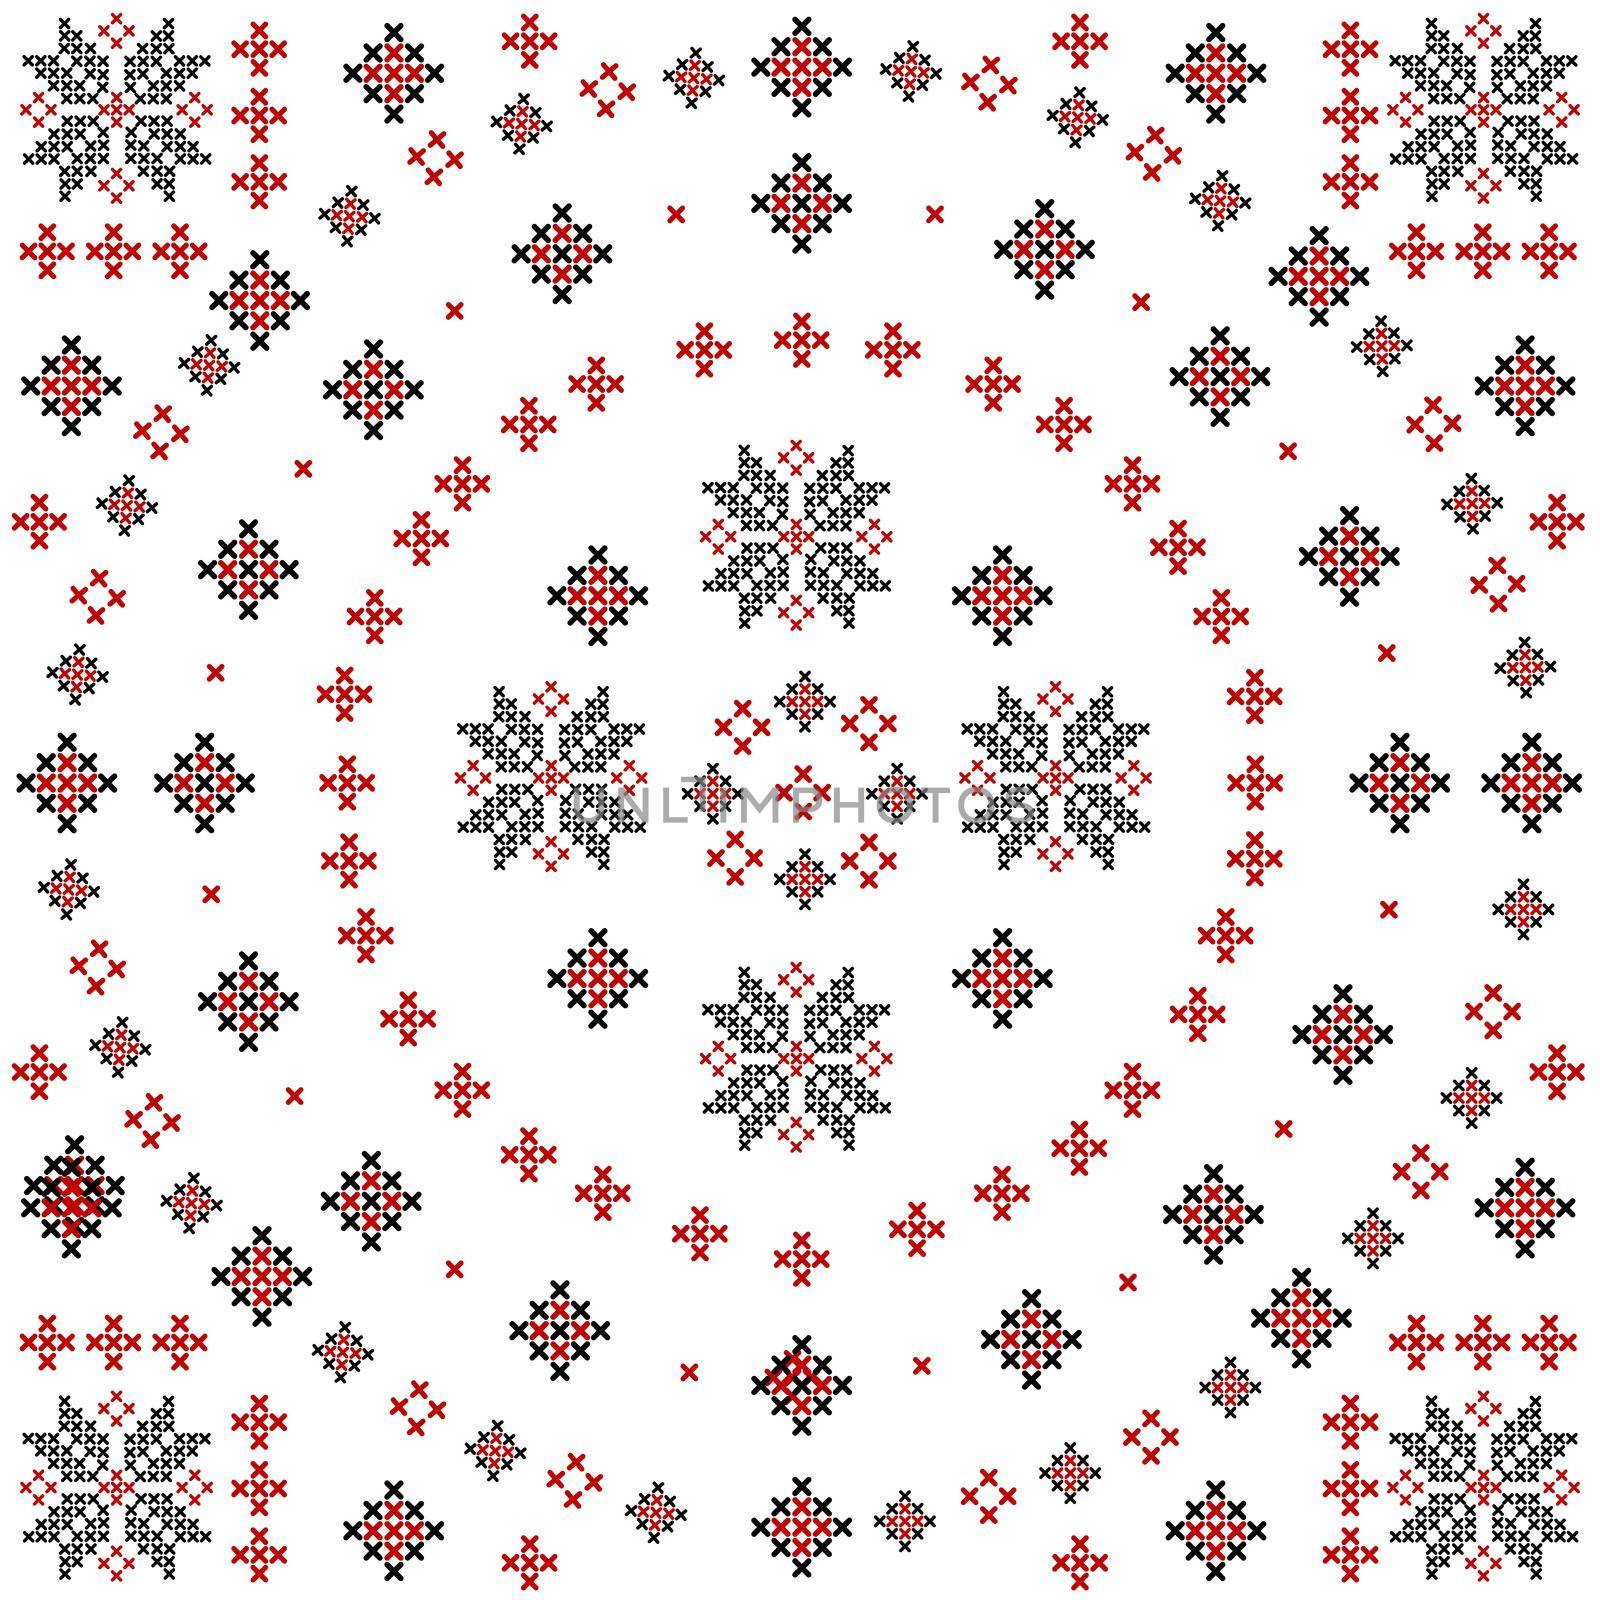 Embroidered cross-stitch round pattern on white background